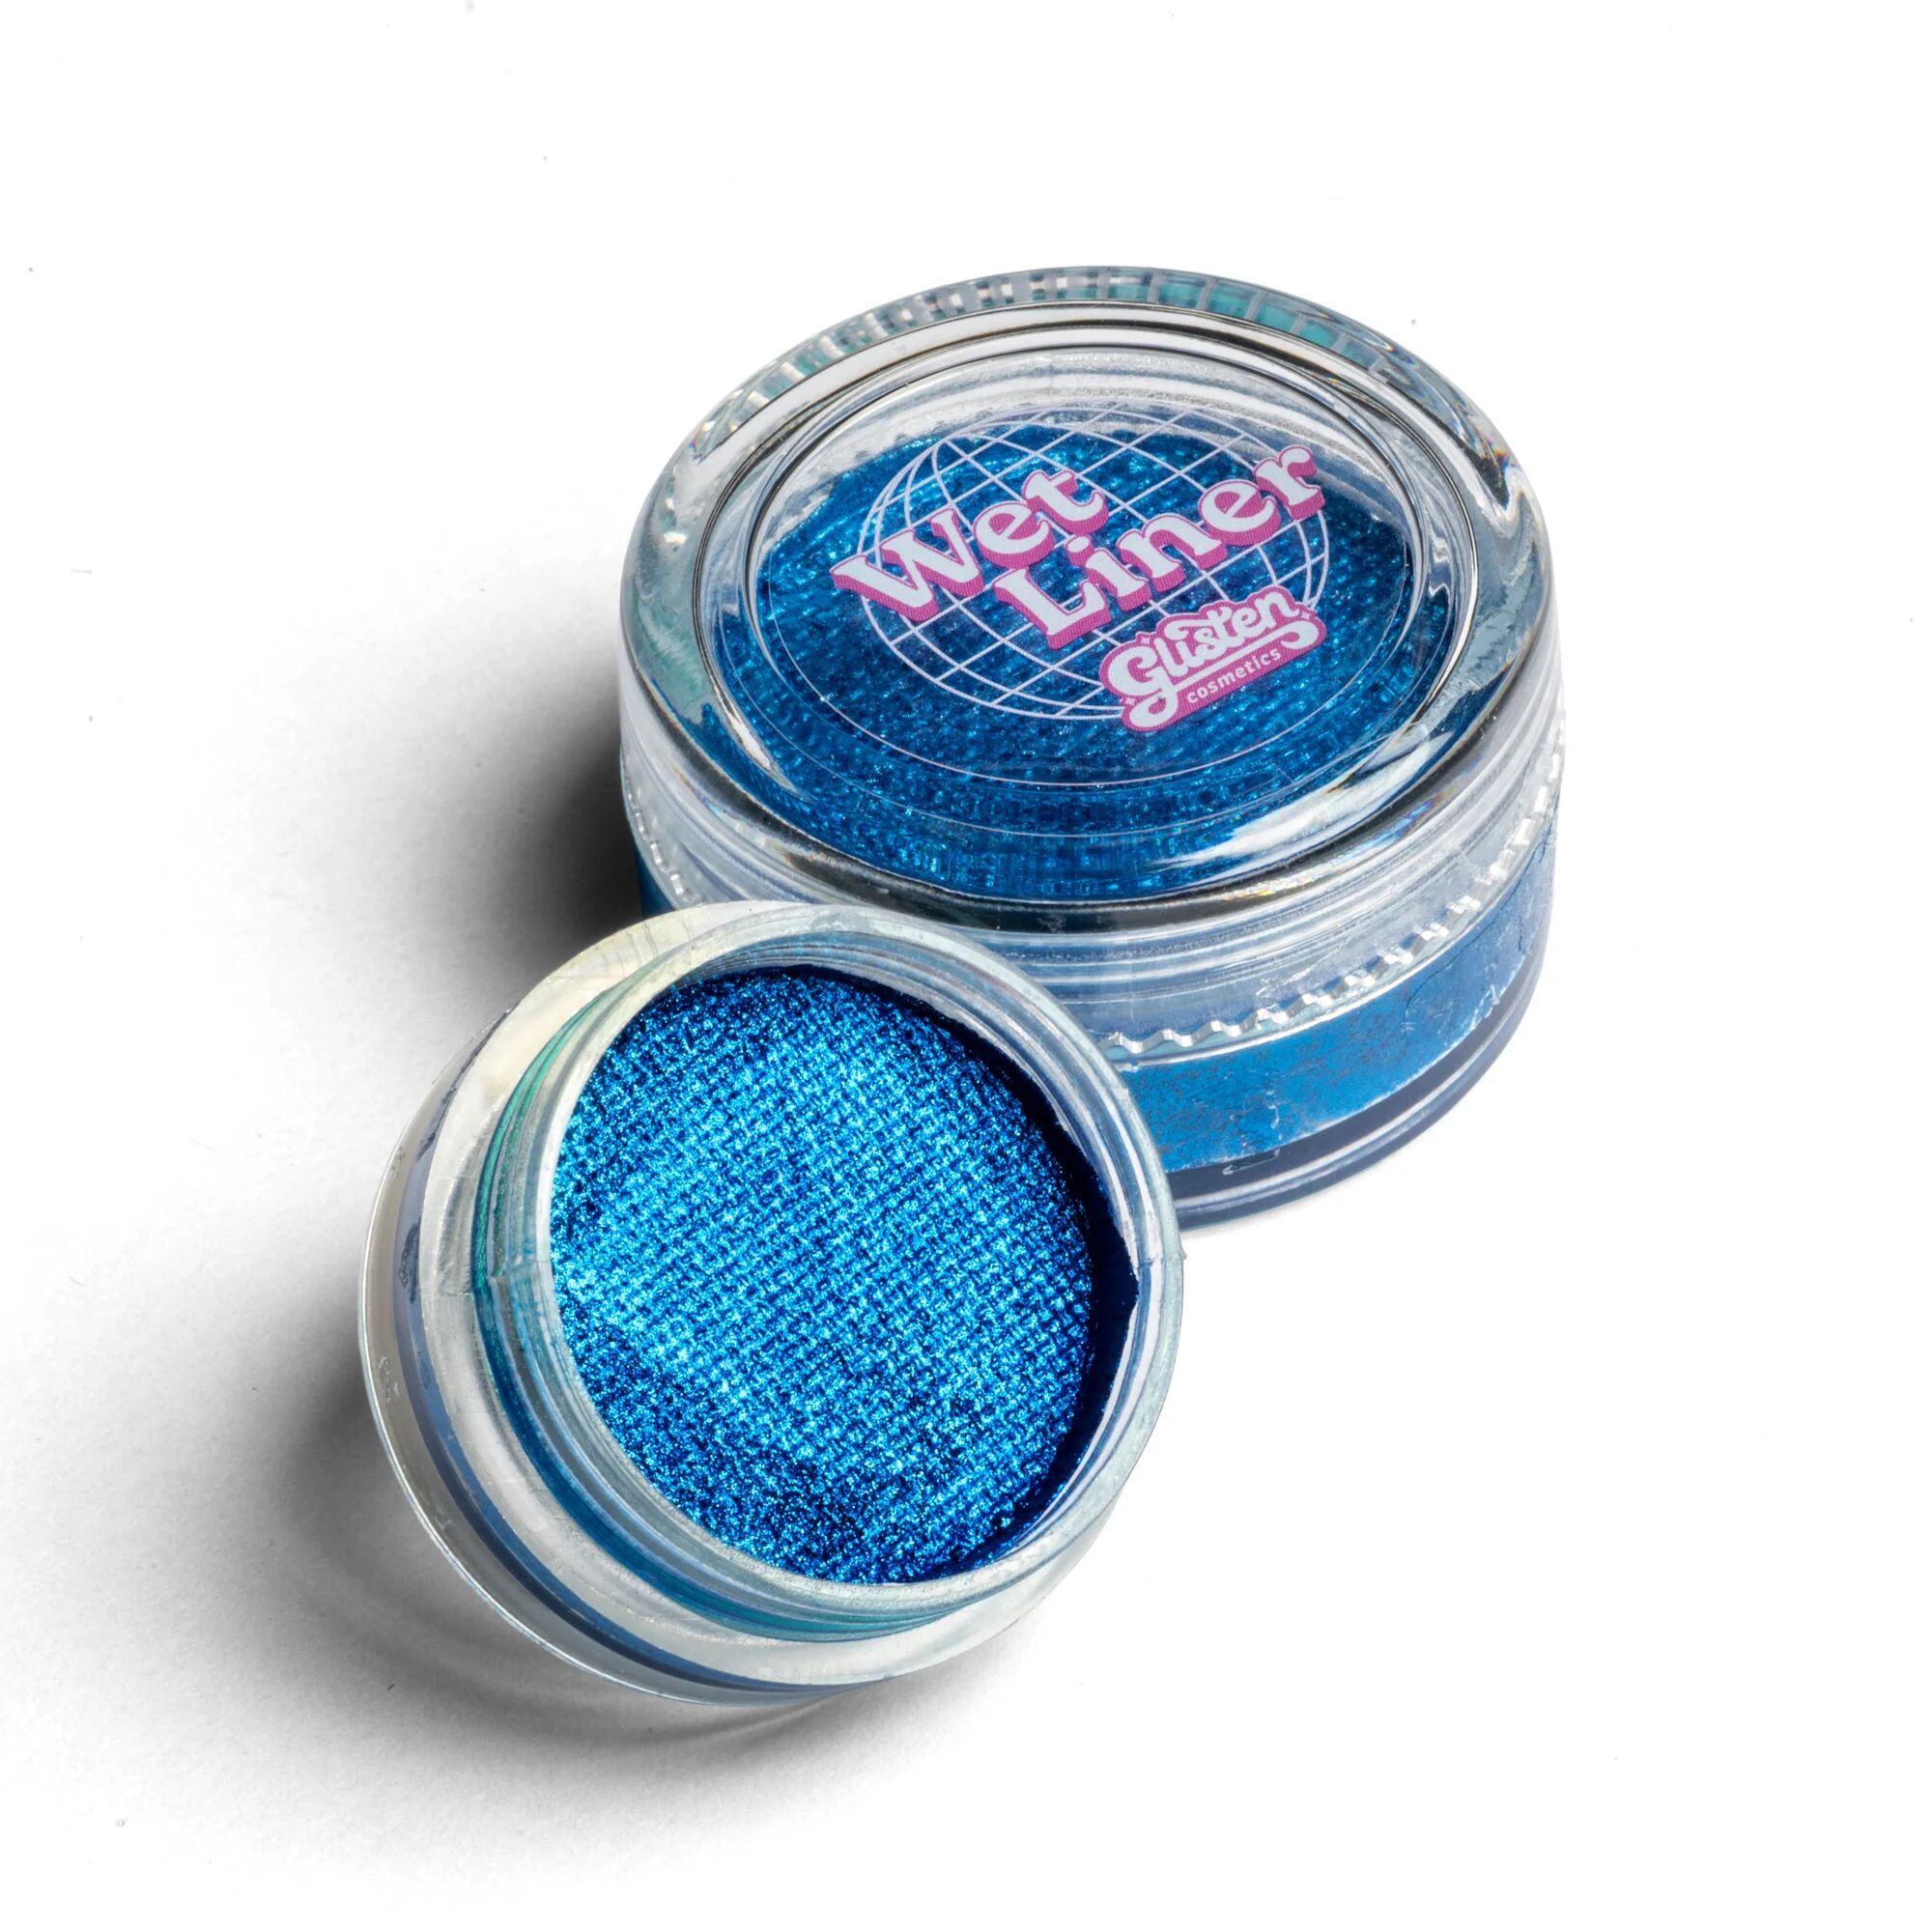 Glisten Cosmetics Moonlight (Dark Blue Metallic) Wet Liner - Eyeliner - Glisten Cosmetic Small - 3g